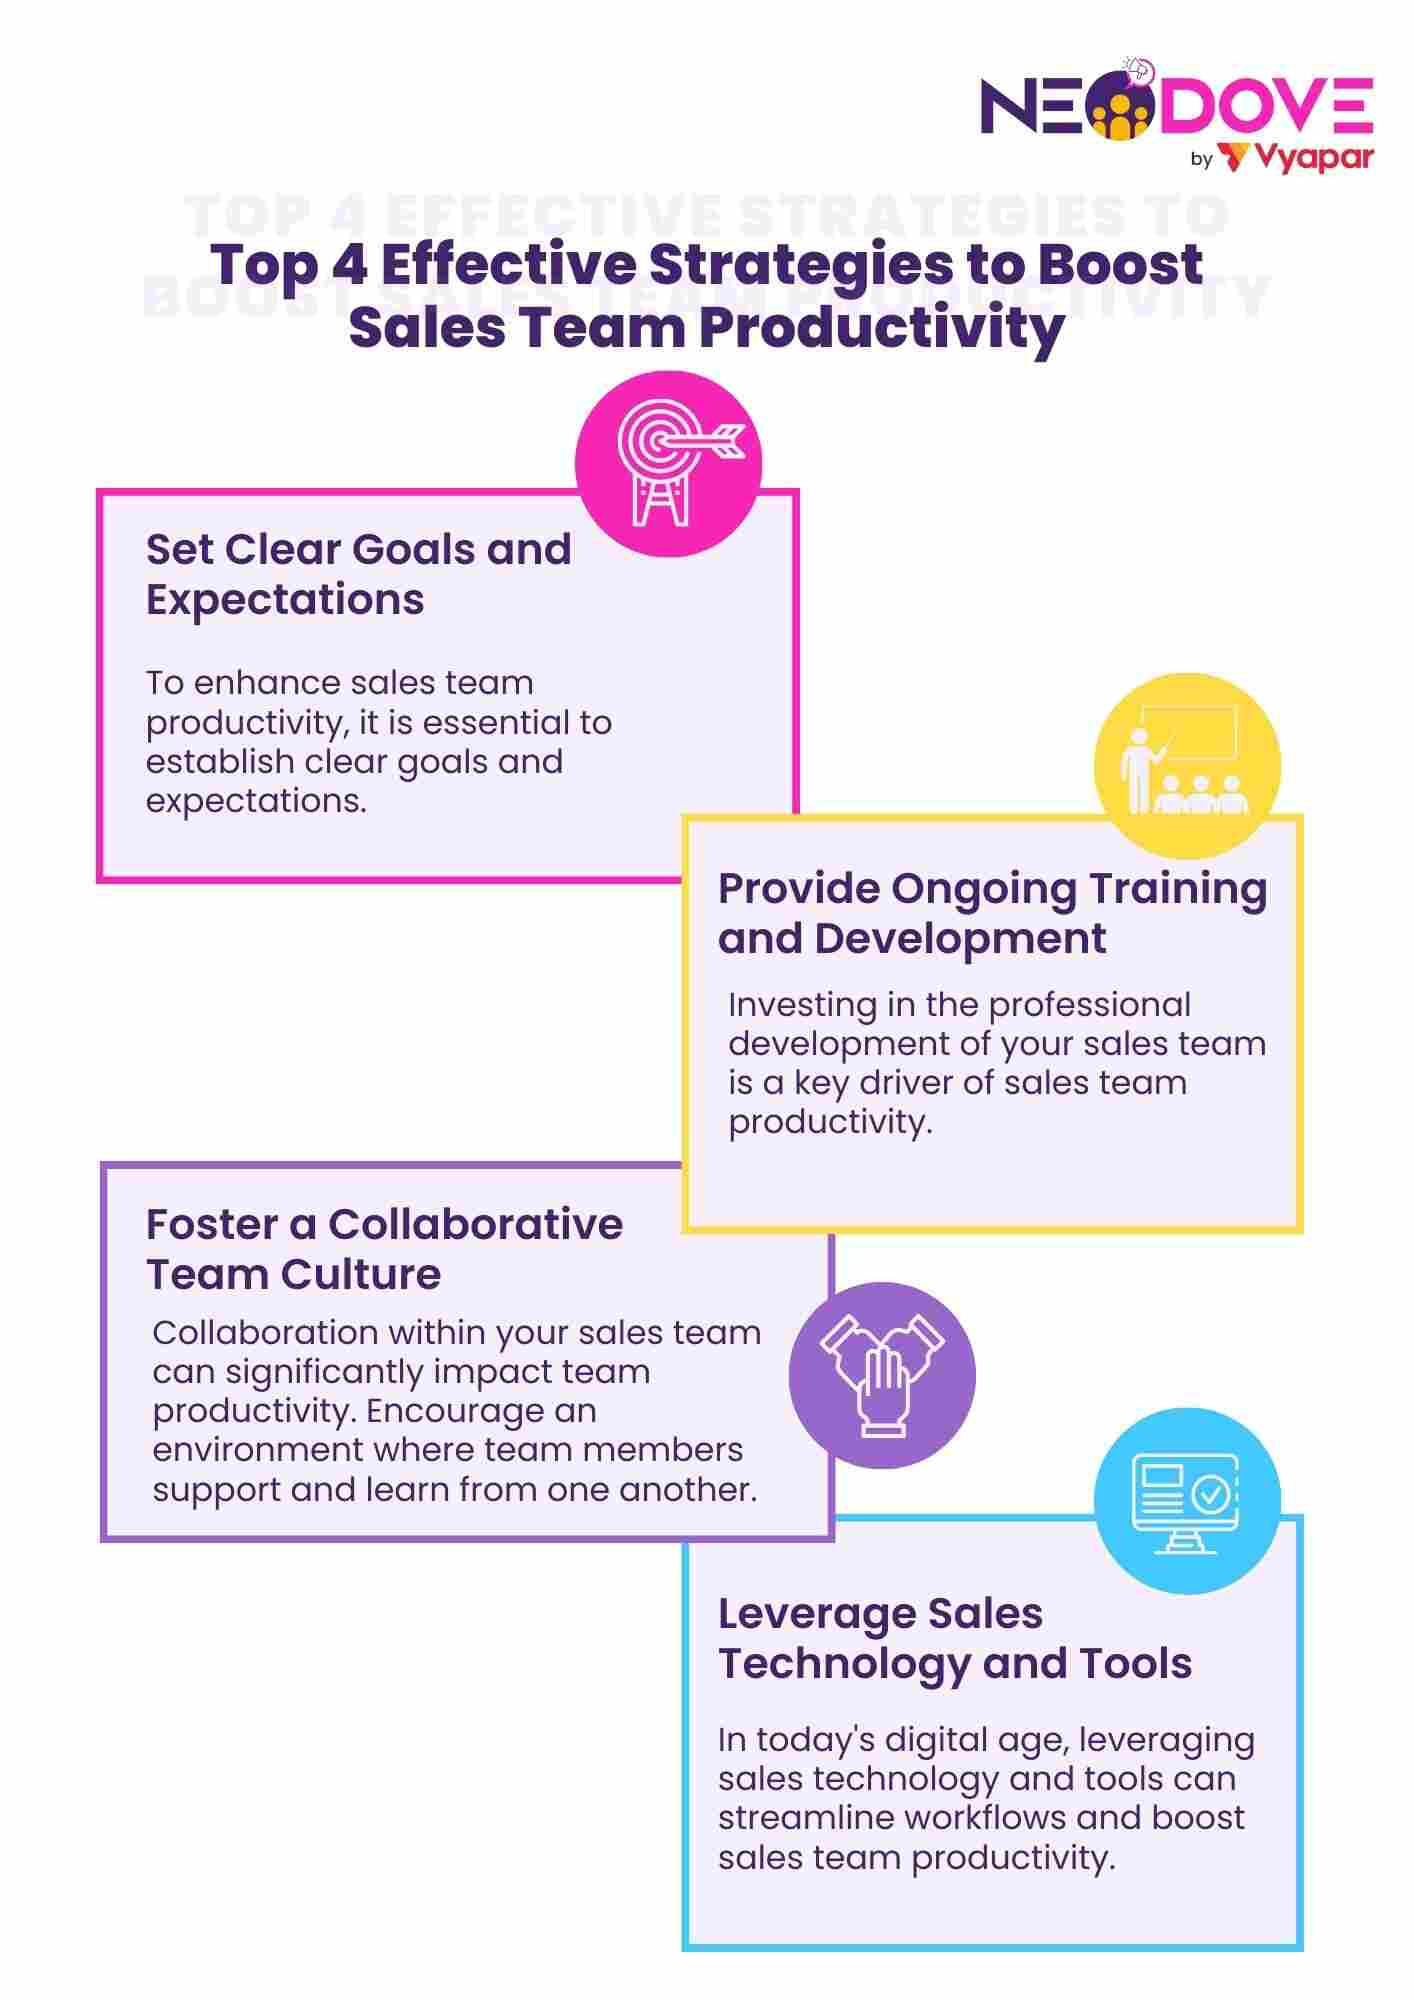 Top 4 Effective Strategies to Boost Sales Team Productivity - NeoDove